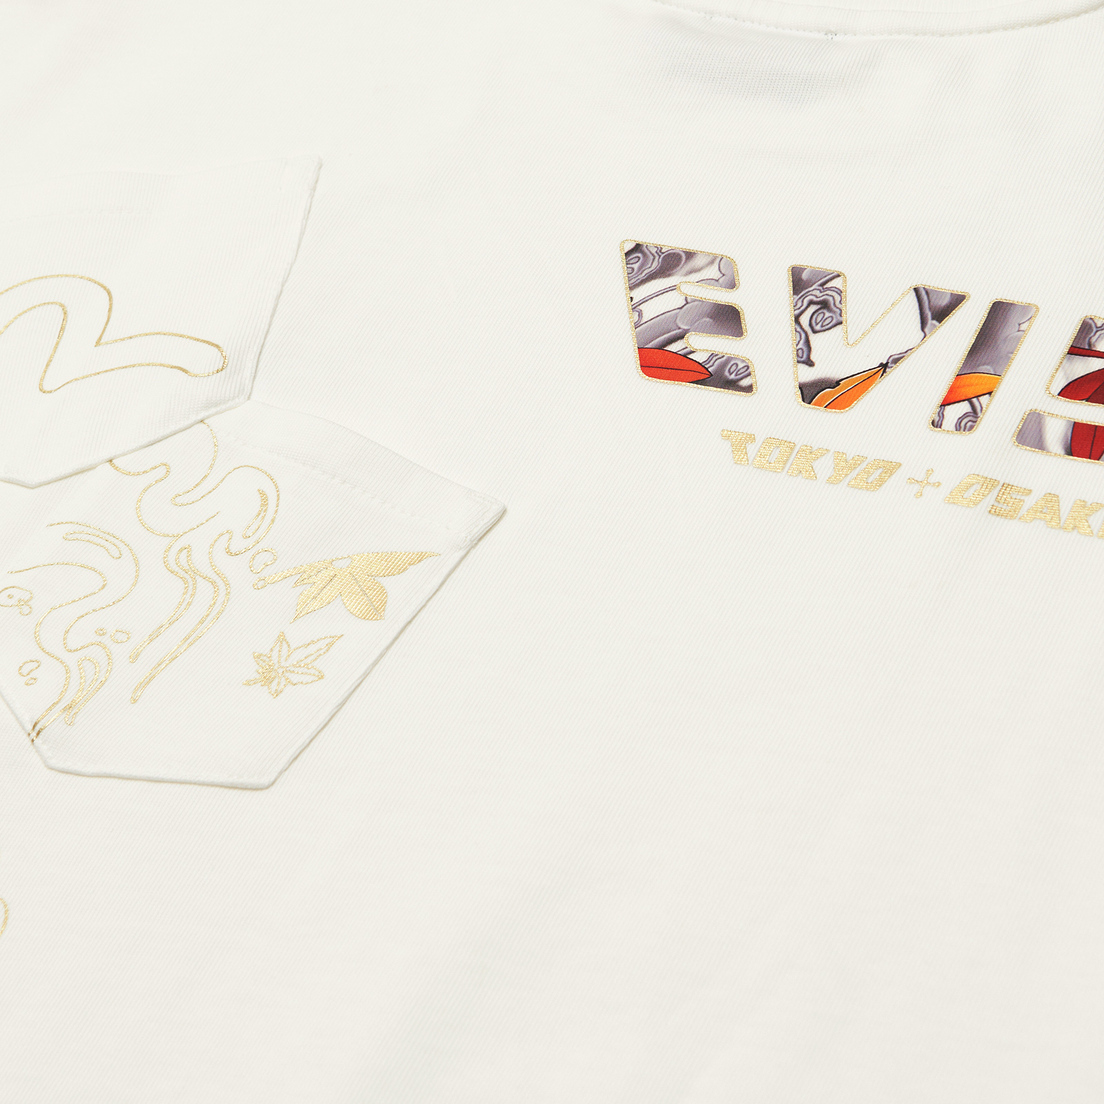 Evisu Мужская футболка Maple Leaf Hot Stamping Foil Evisu & Seagull Print